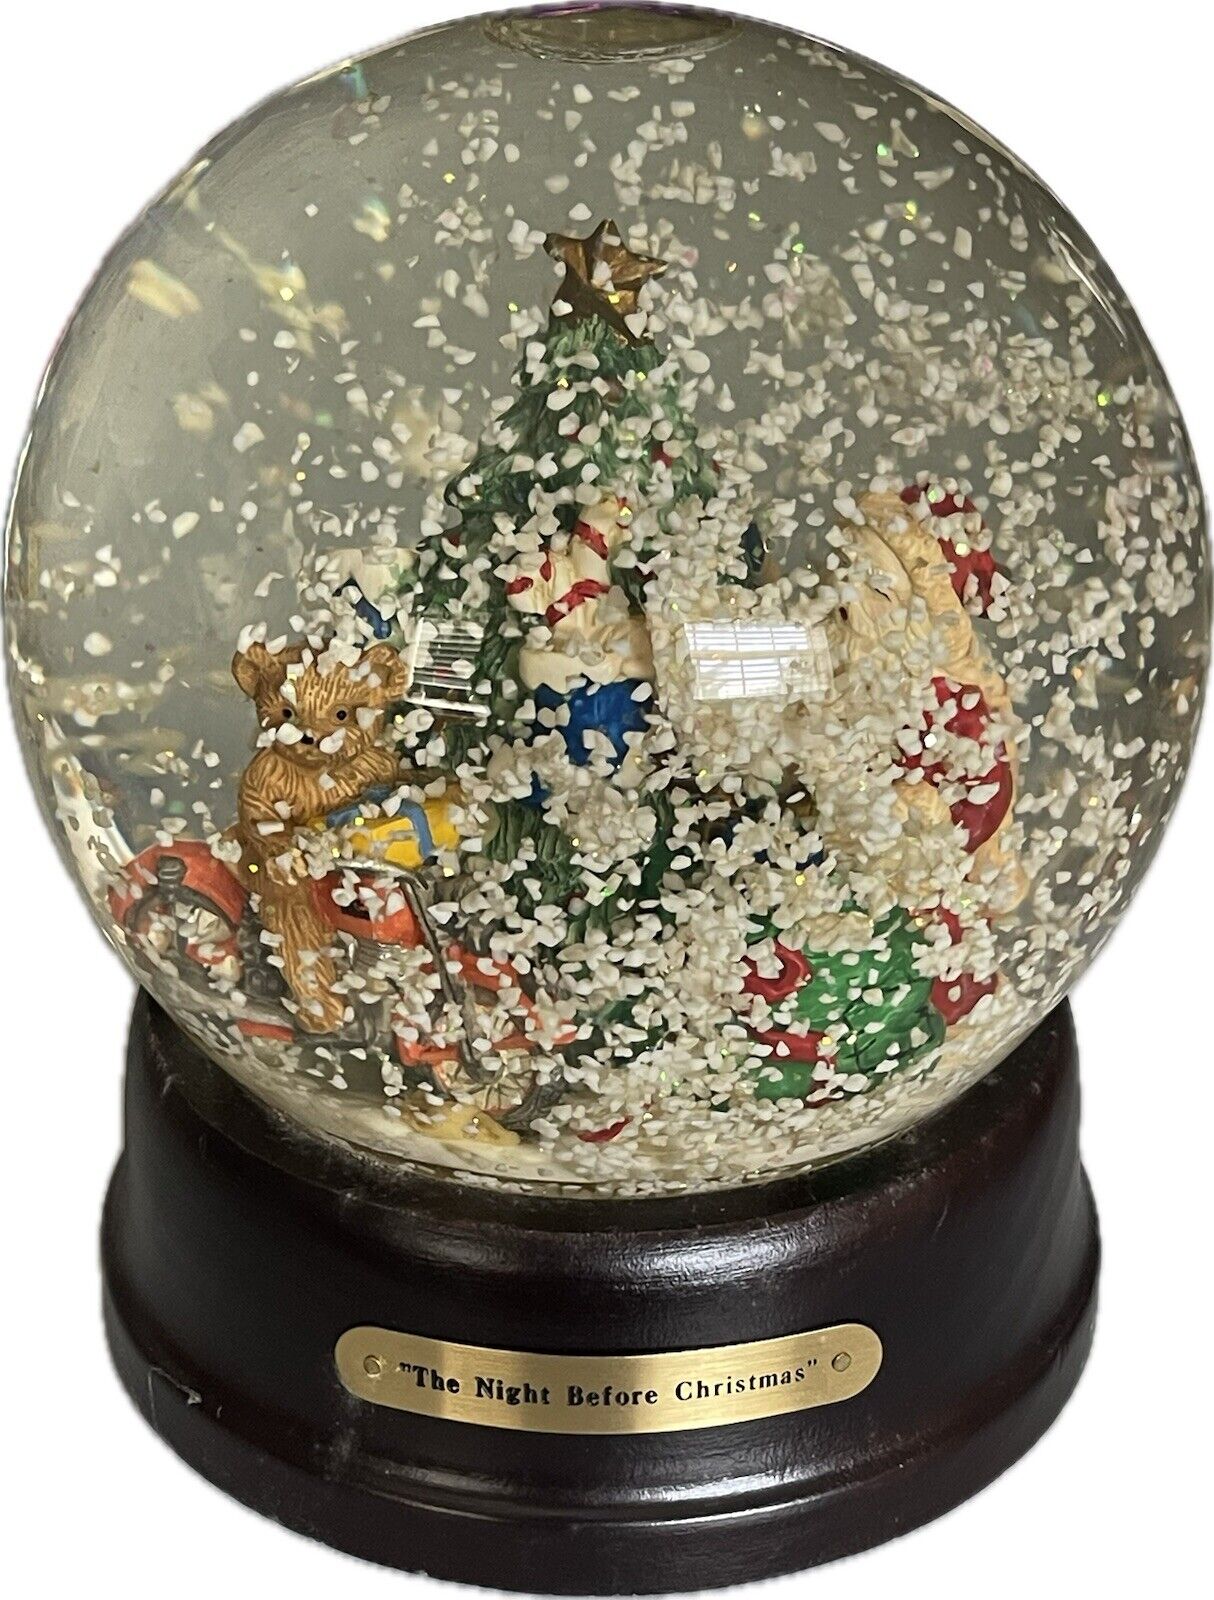 VINTAGE 1990 HARLEY DAVIDSON SNOW GLOBE MUSIC BOX~THE NIGHT BEFORE CHRISTMAS~NOS